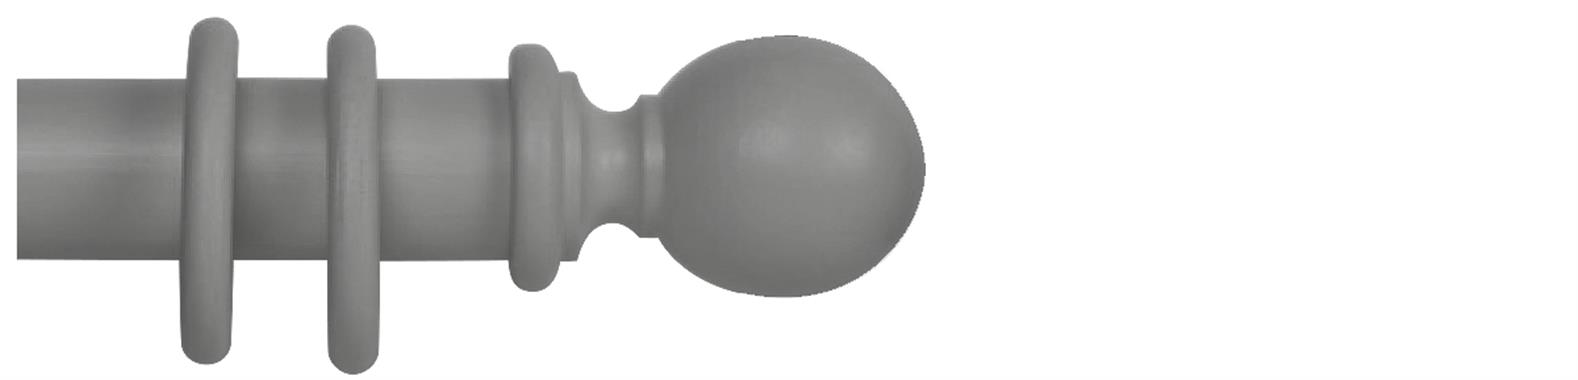 Cameron Fuller 35mm Pole Slate Ball